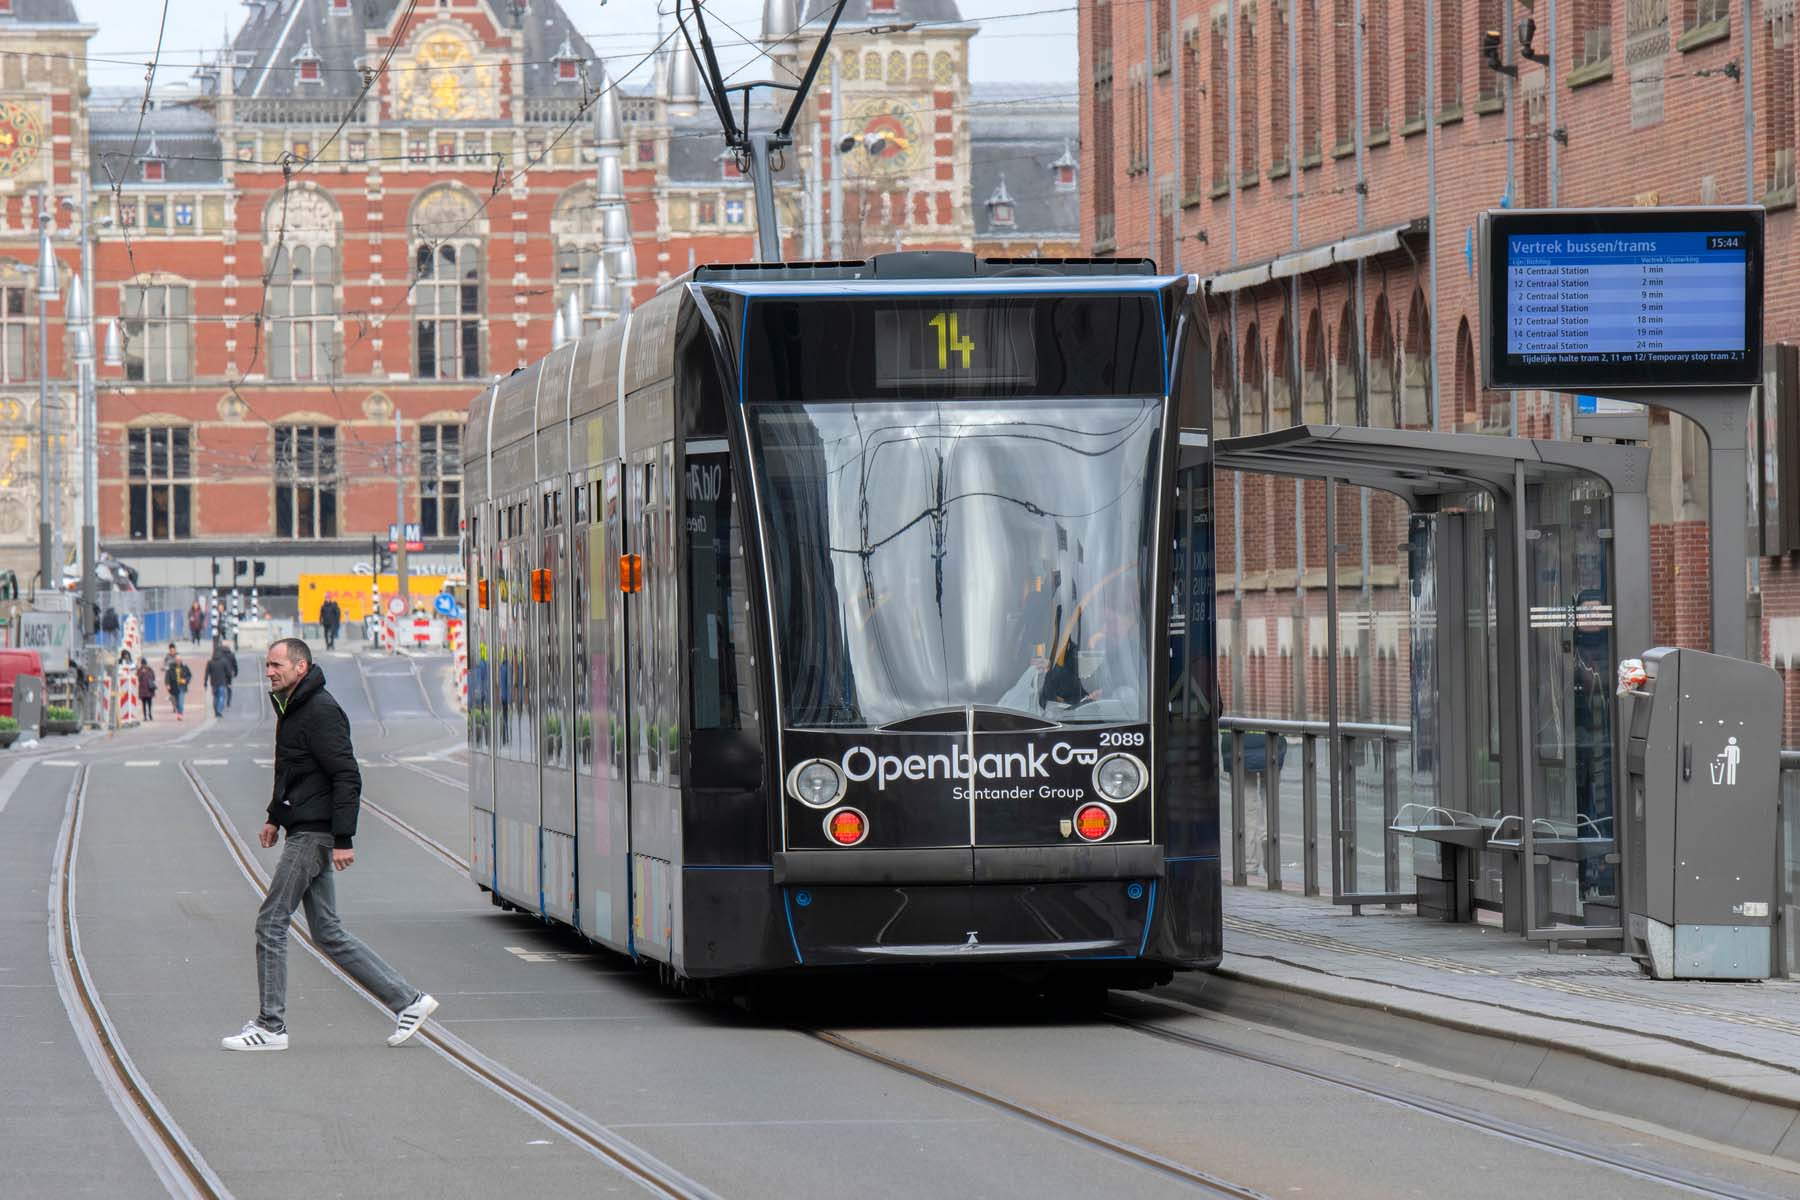 openbank tram in Amsterdam